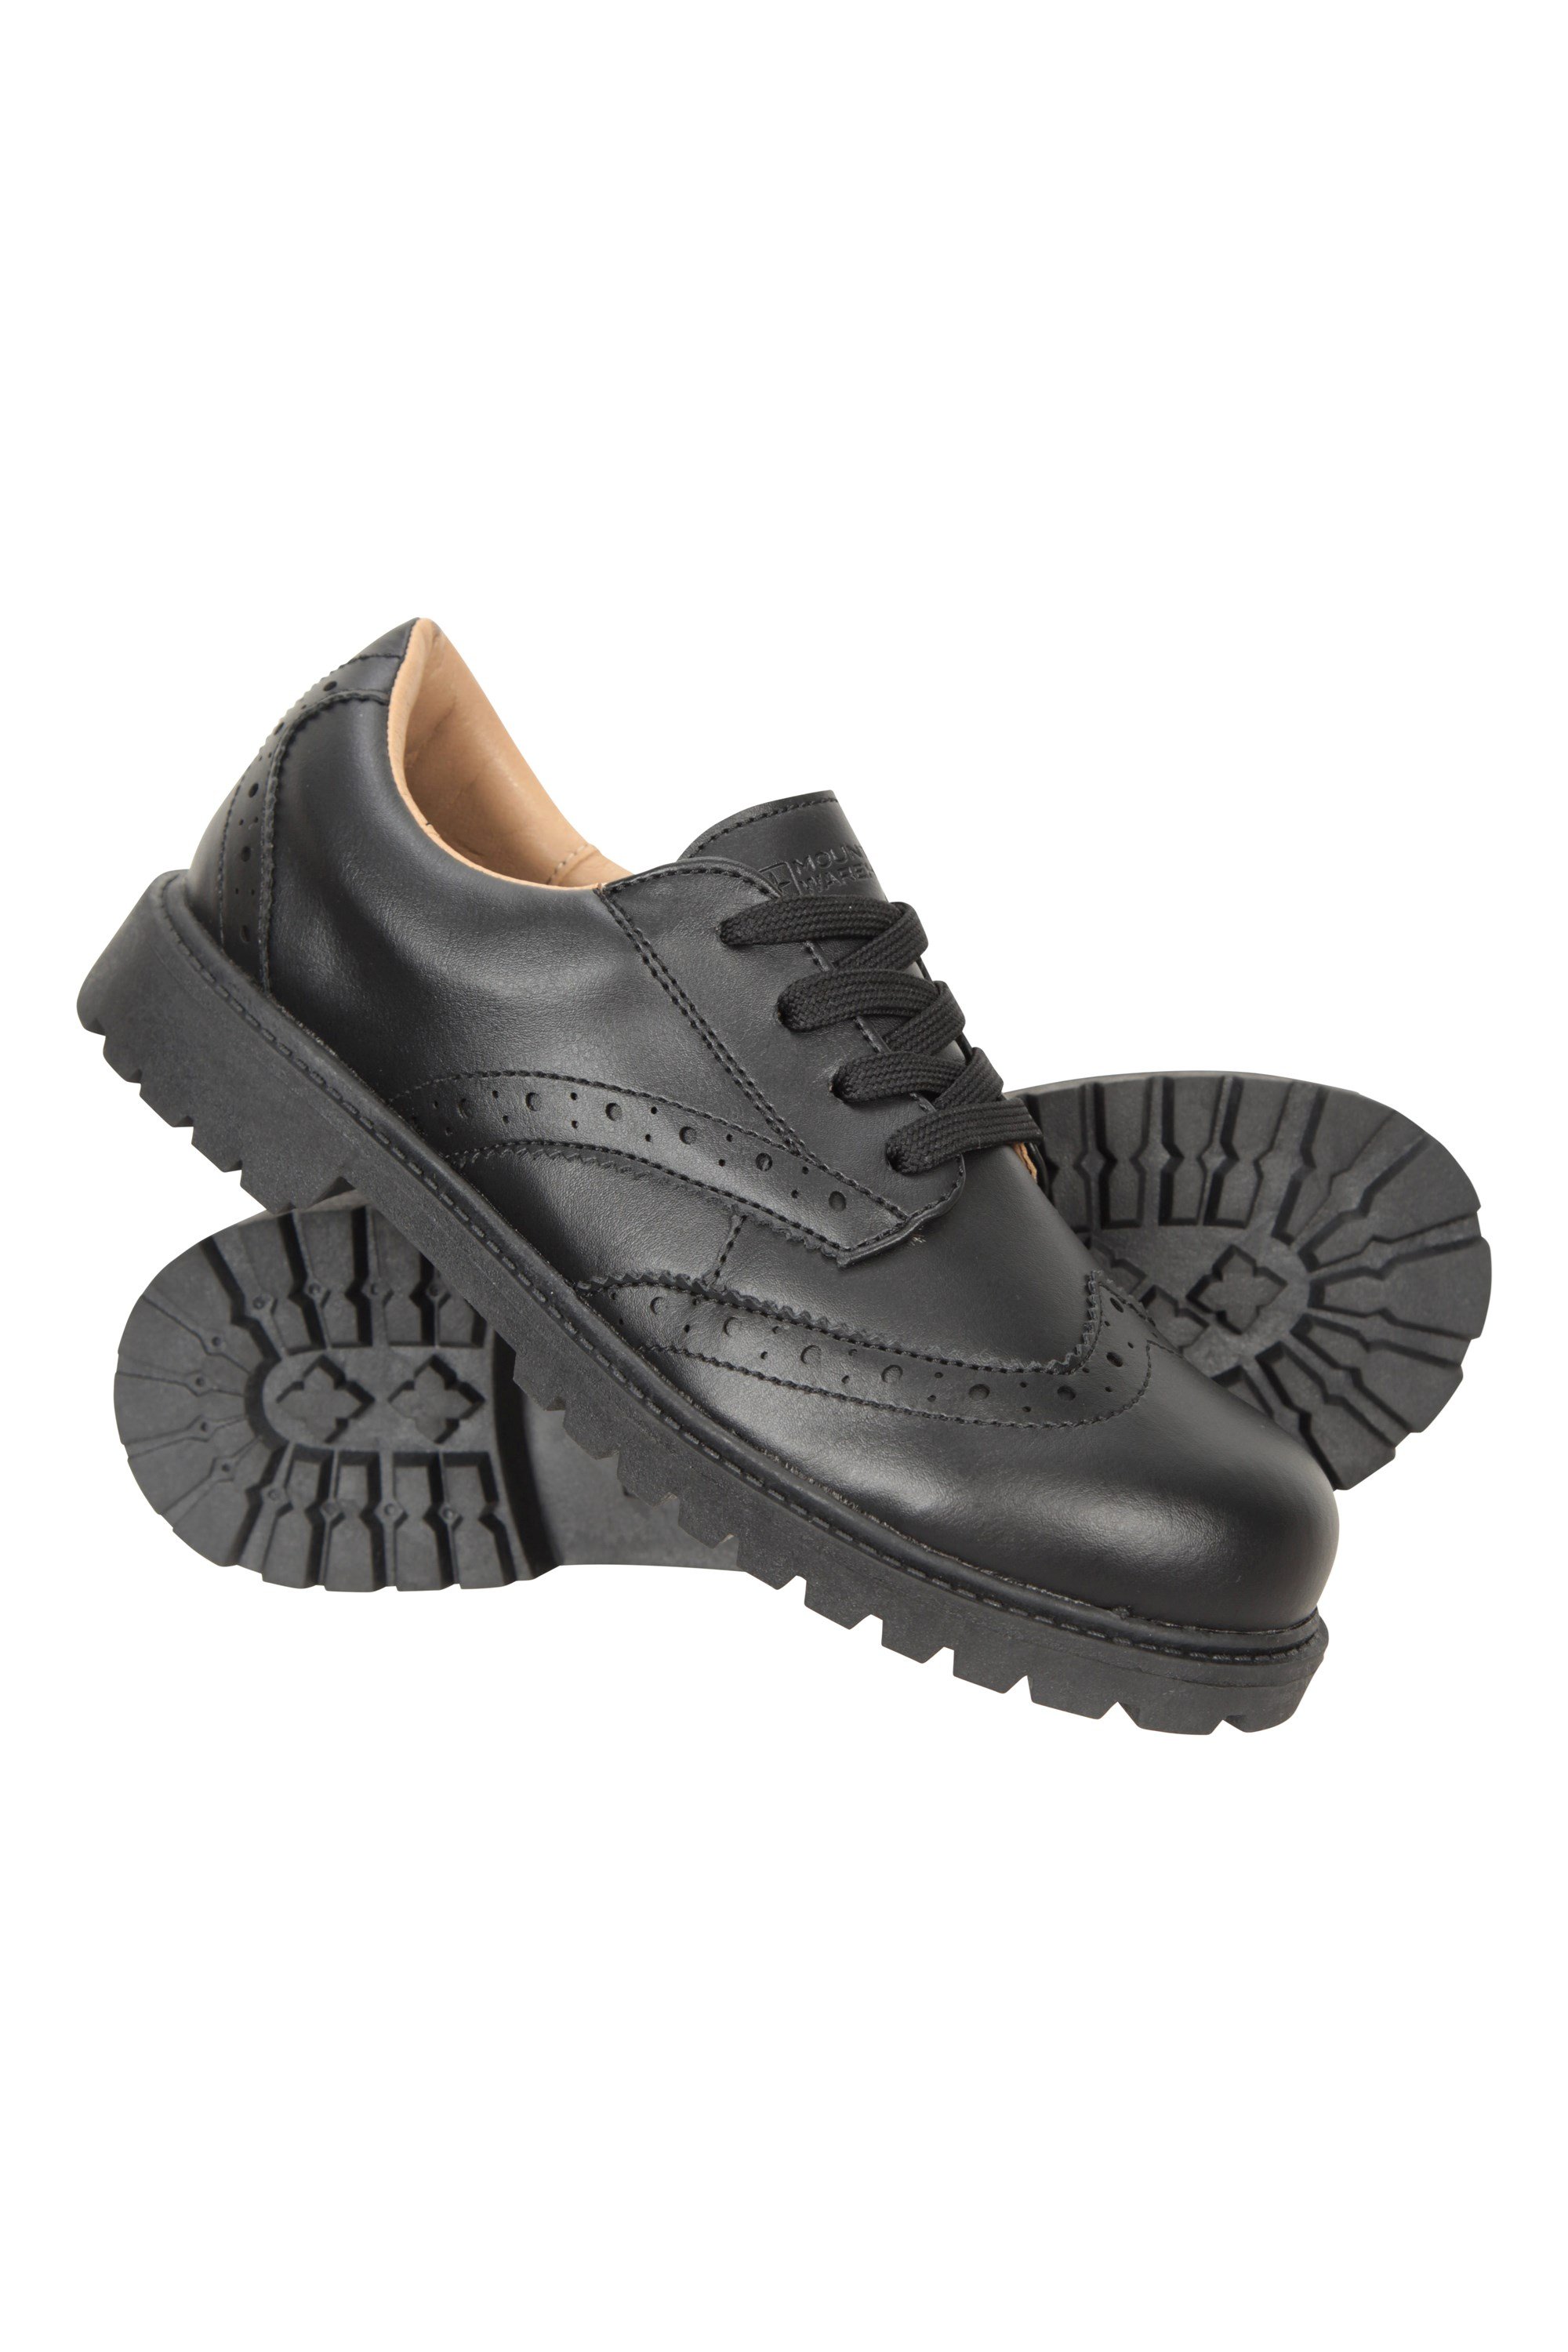 Playground Kids Brogue School Shoes - Black